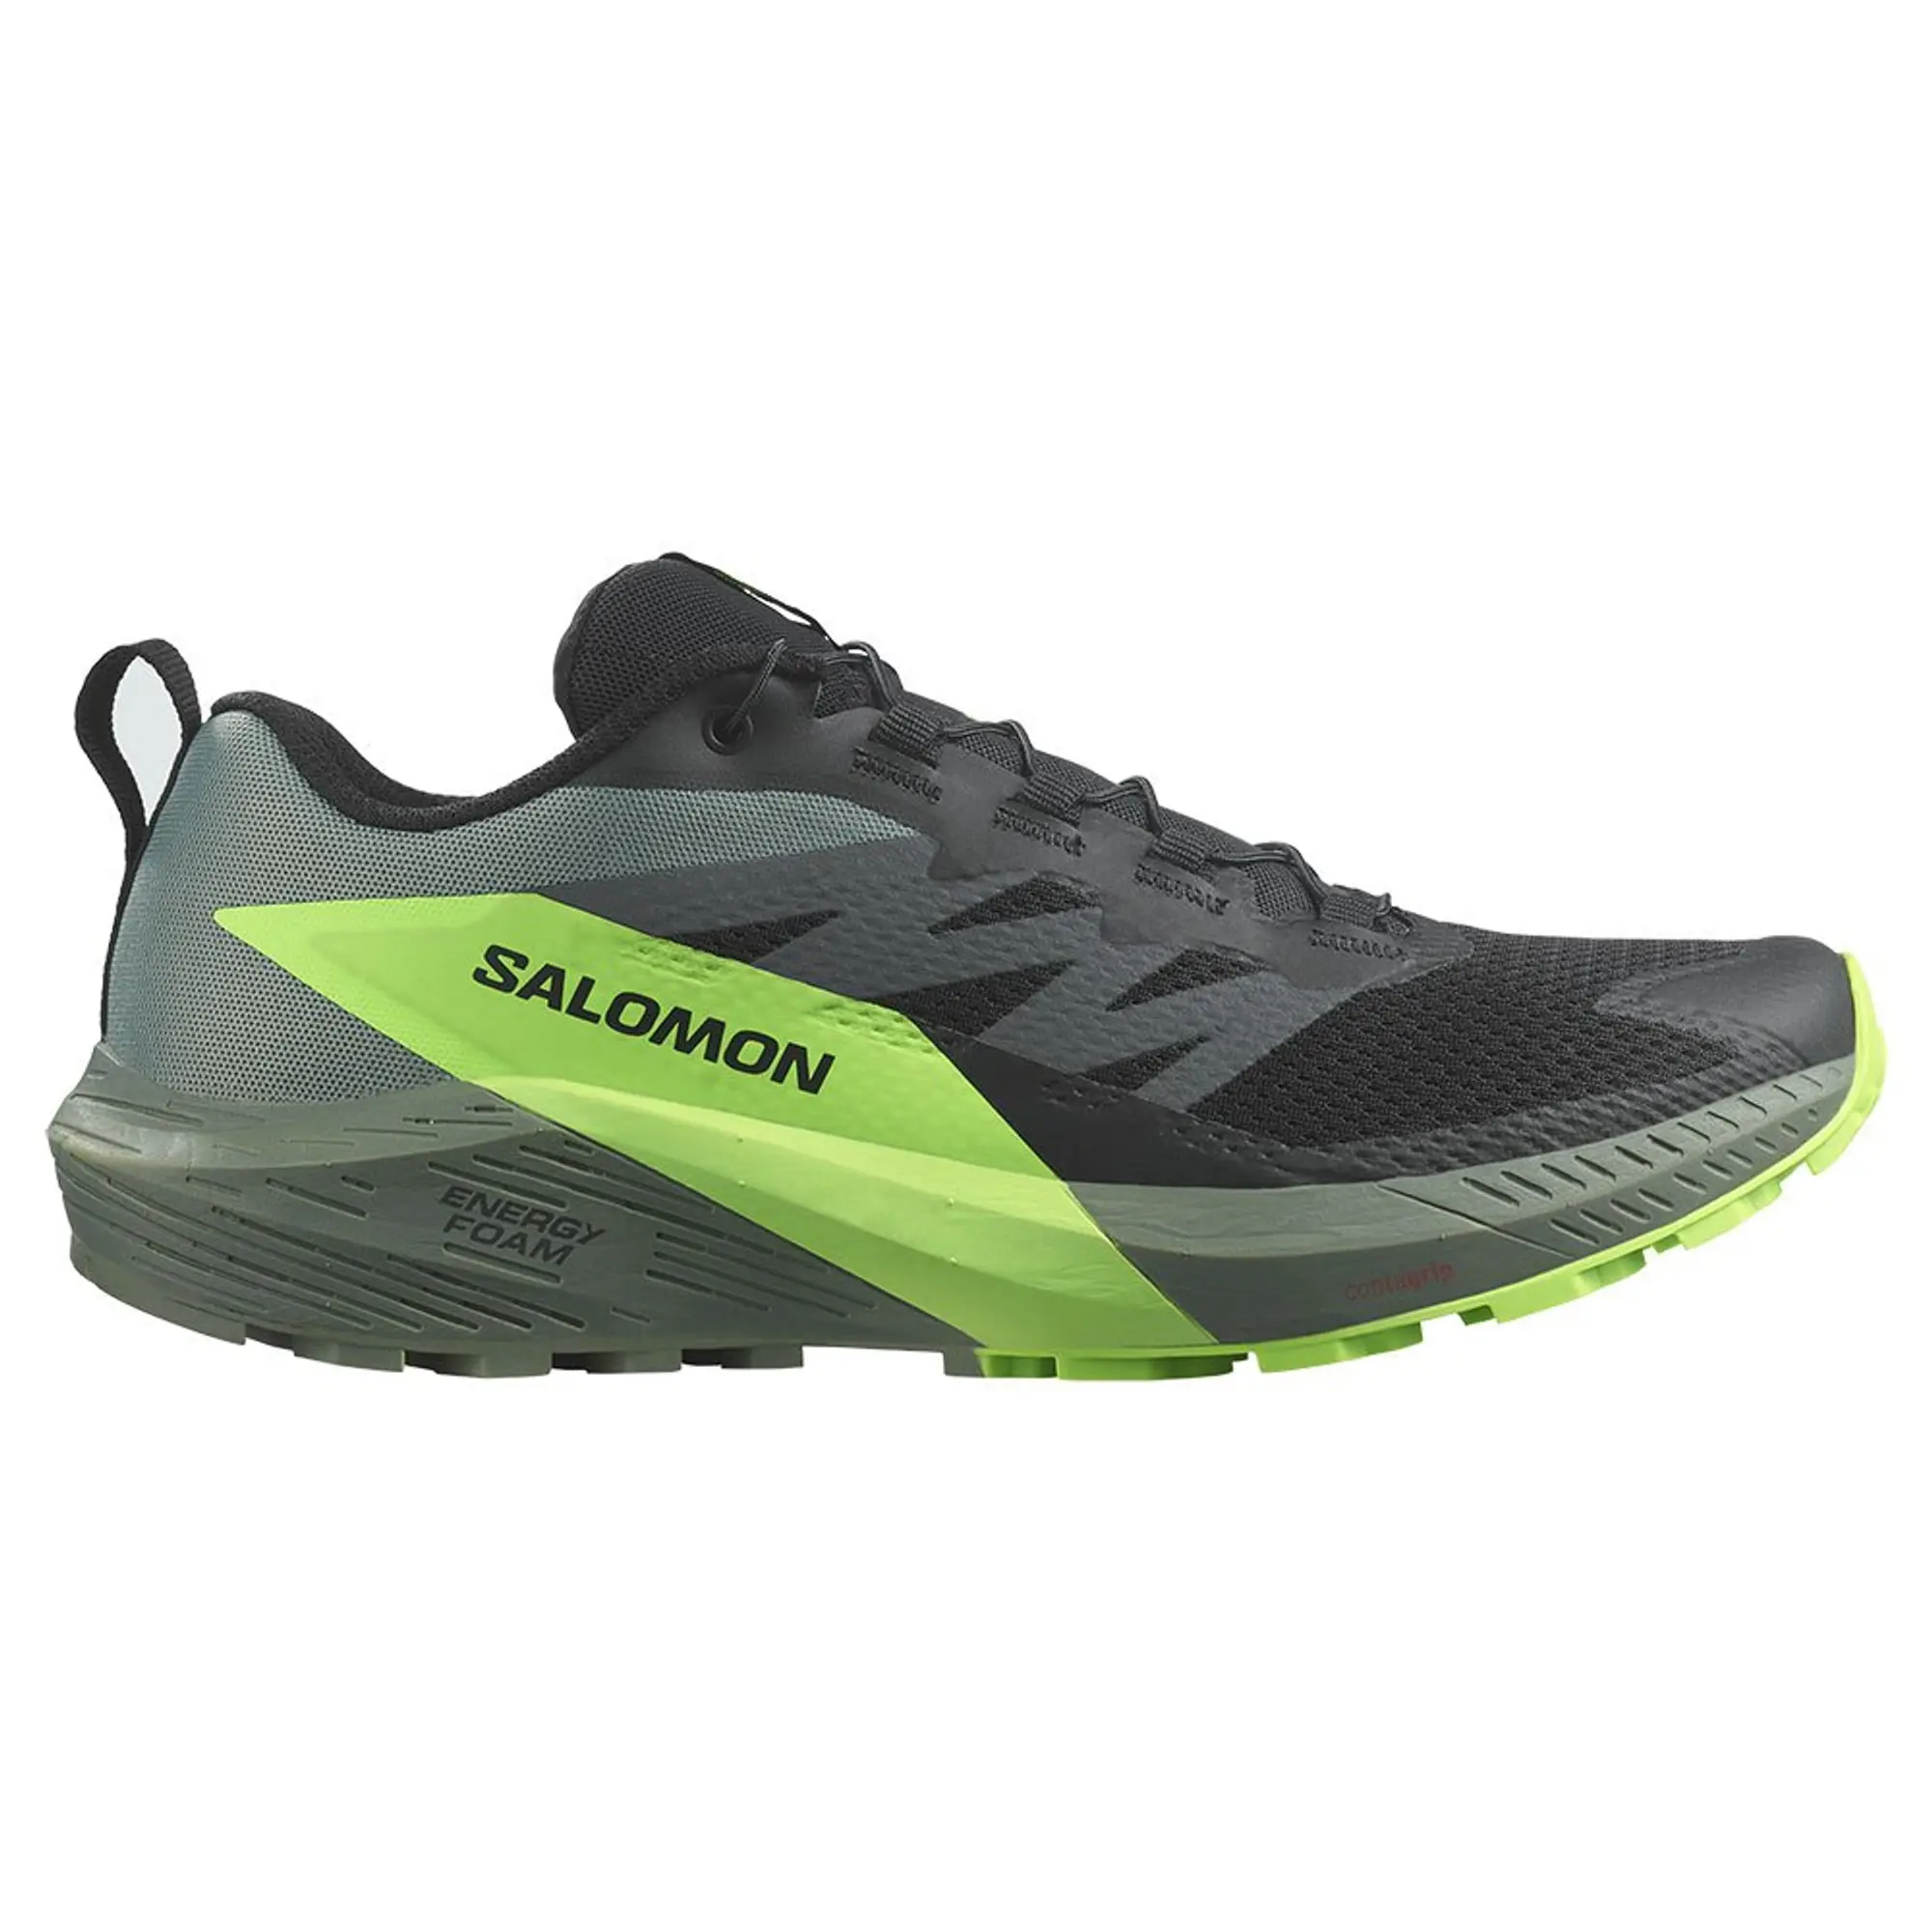 Salomon Sense Ride 5 Trail Running Shoes  - Green,Black